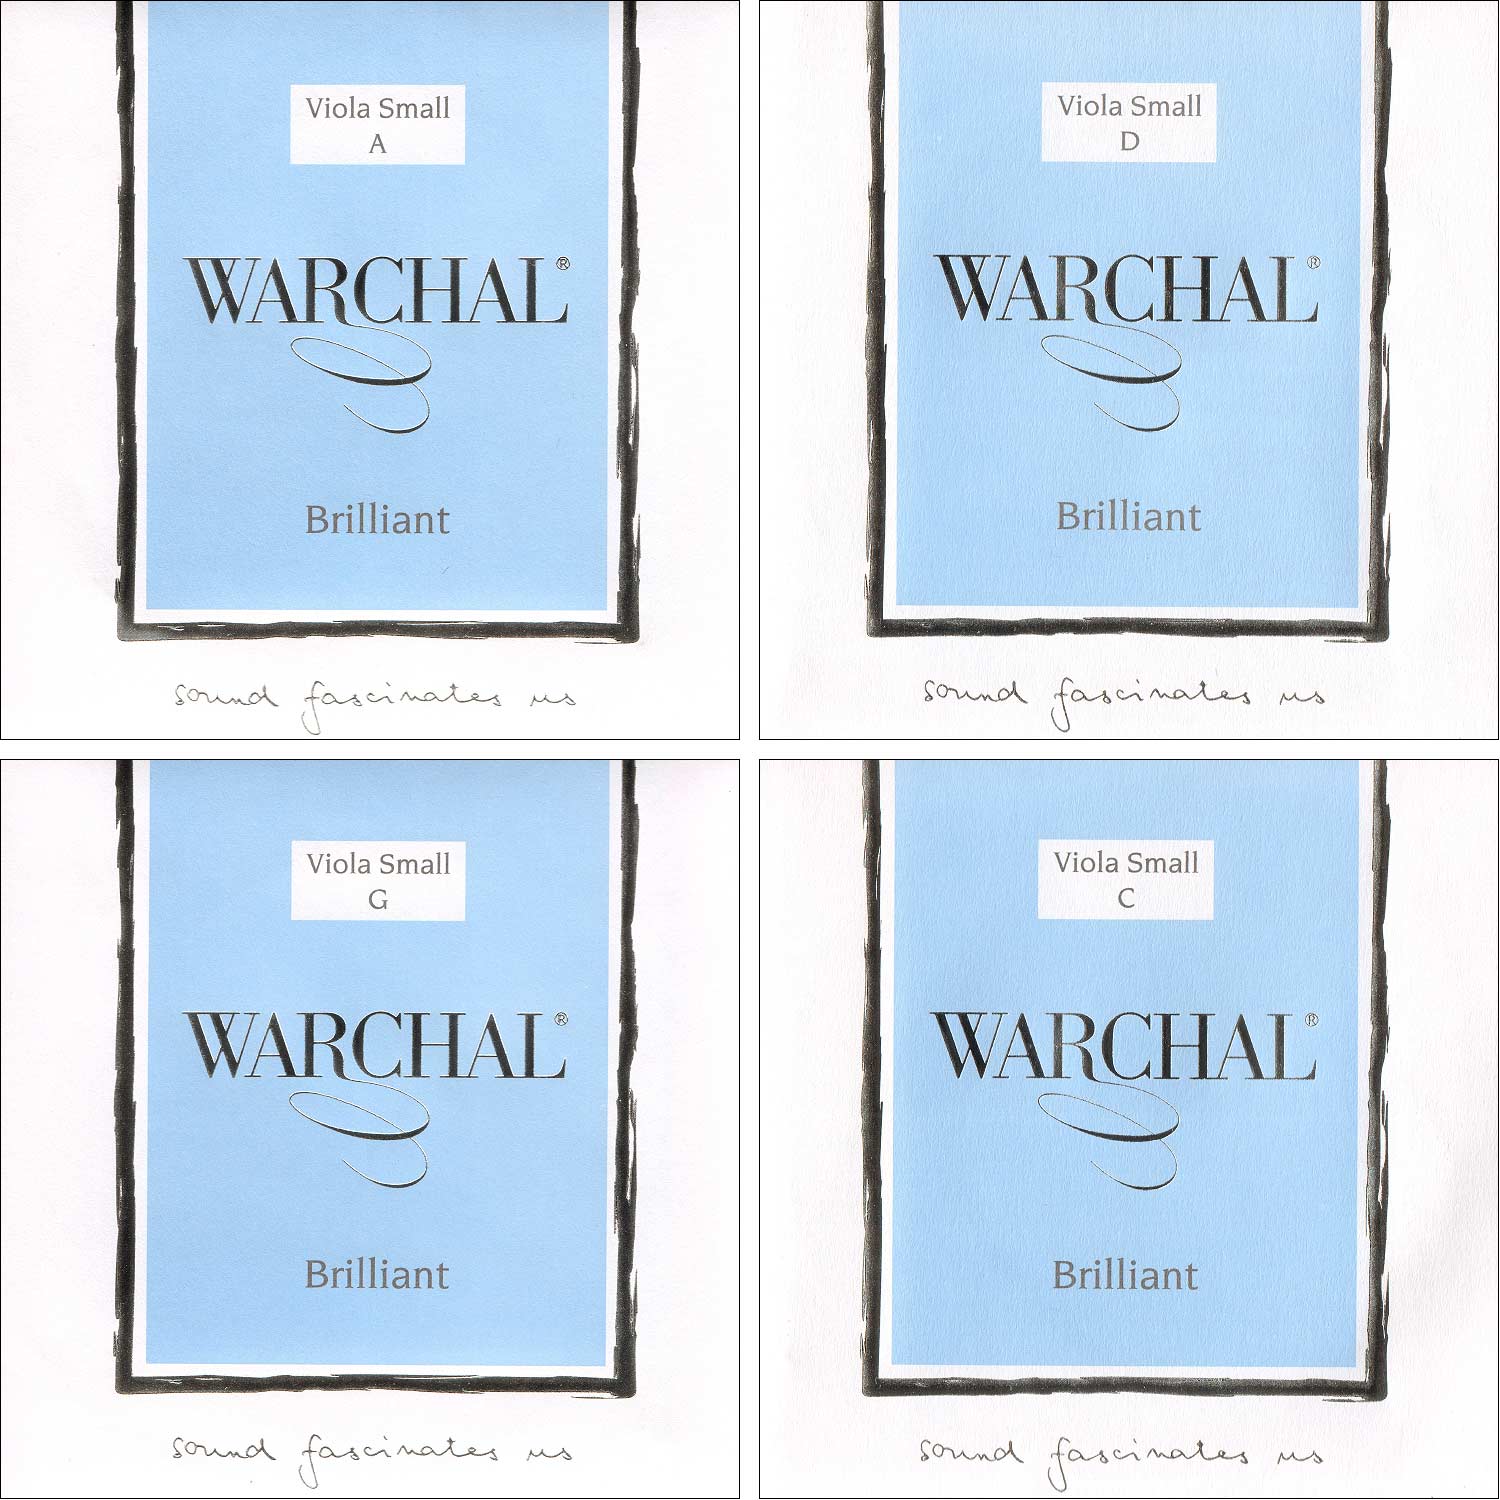 Warchal Brilliant 15